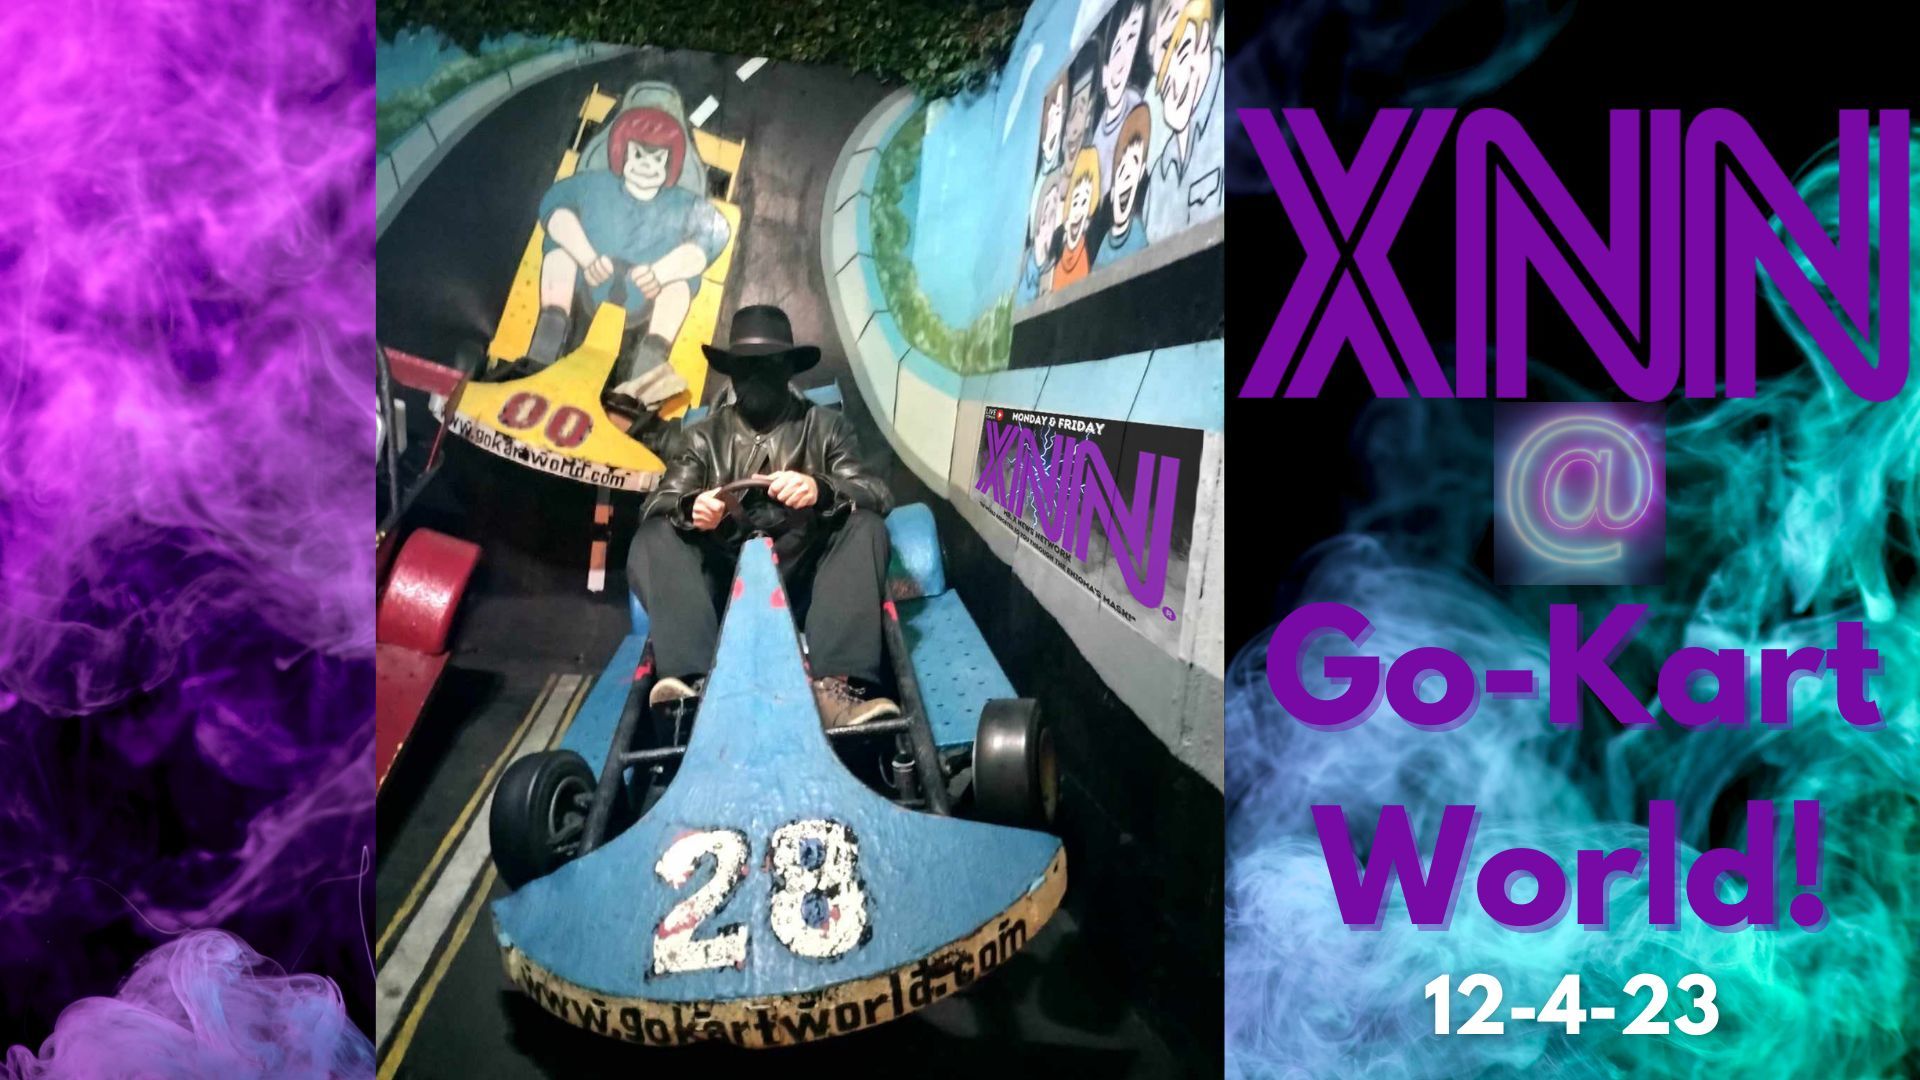 Mr. X News Network Goes 2 Go-Kart World (12-4-23)